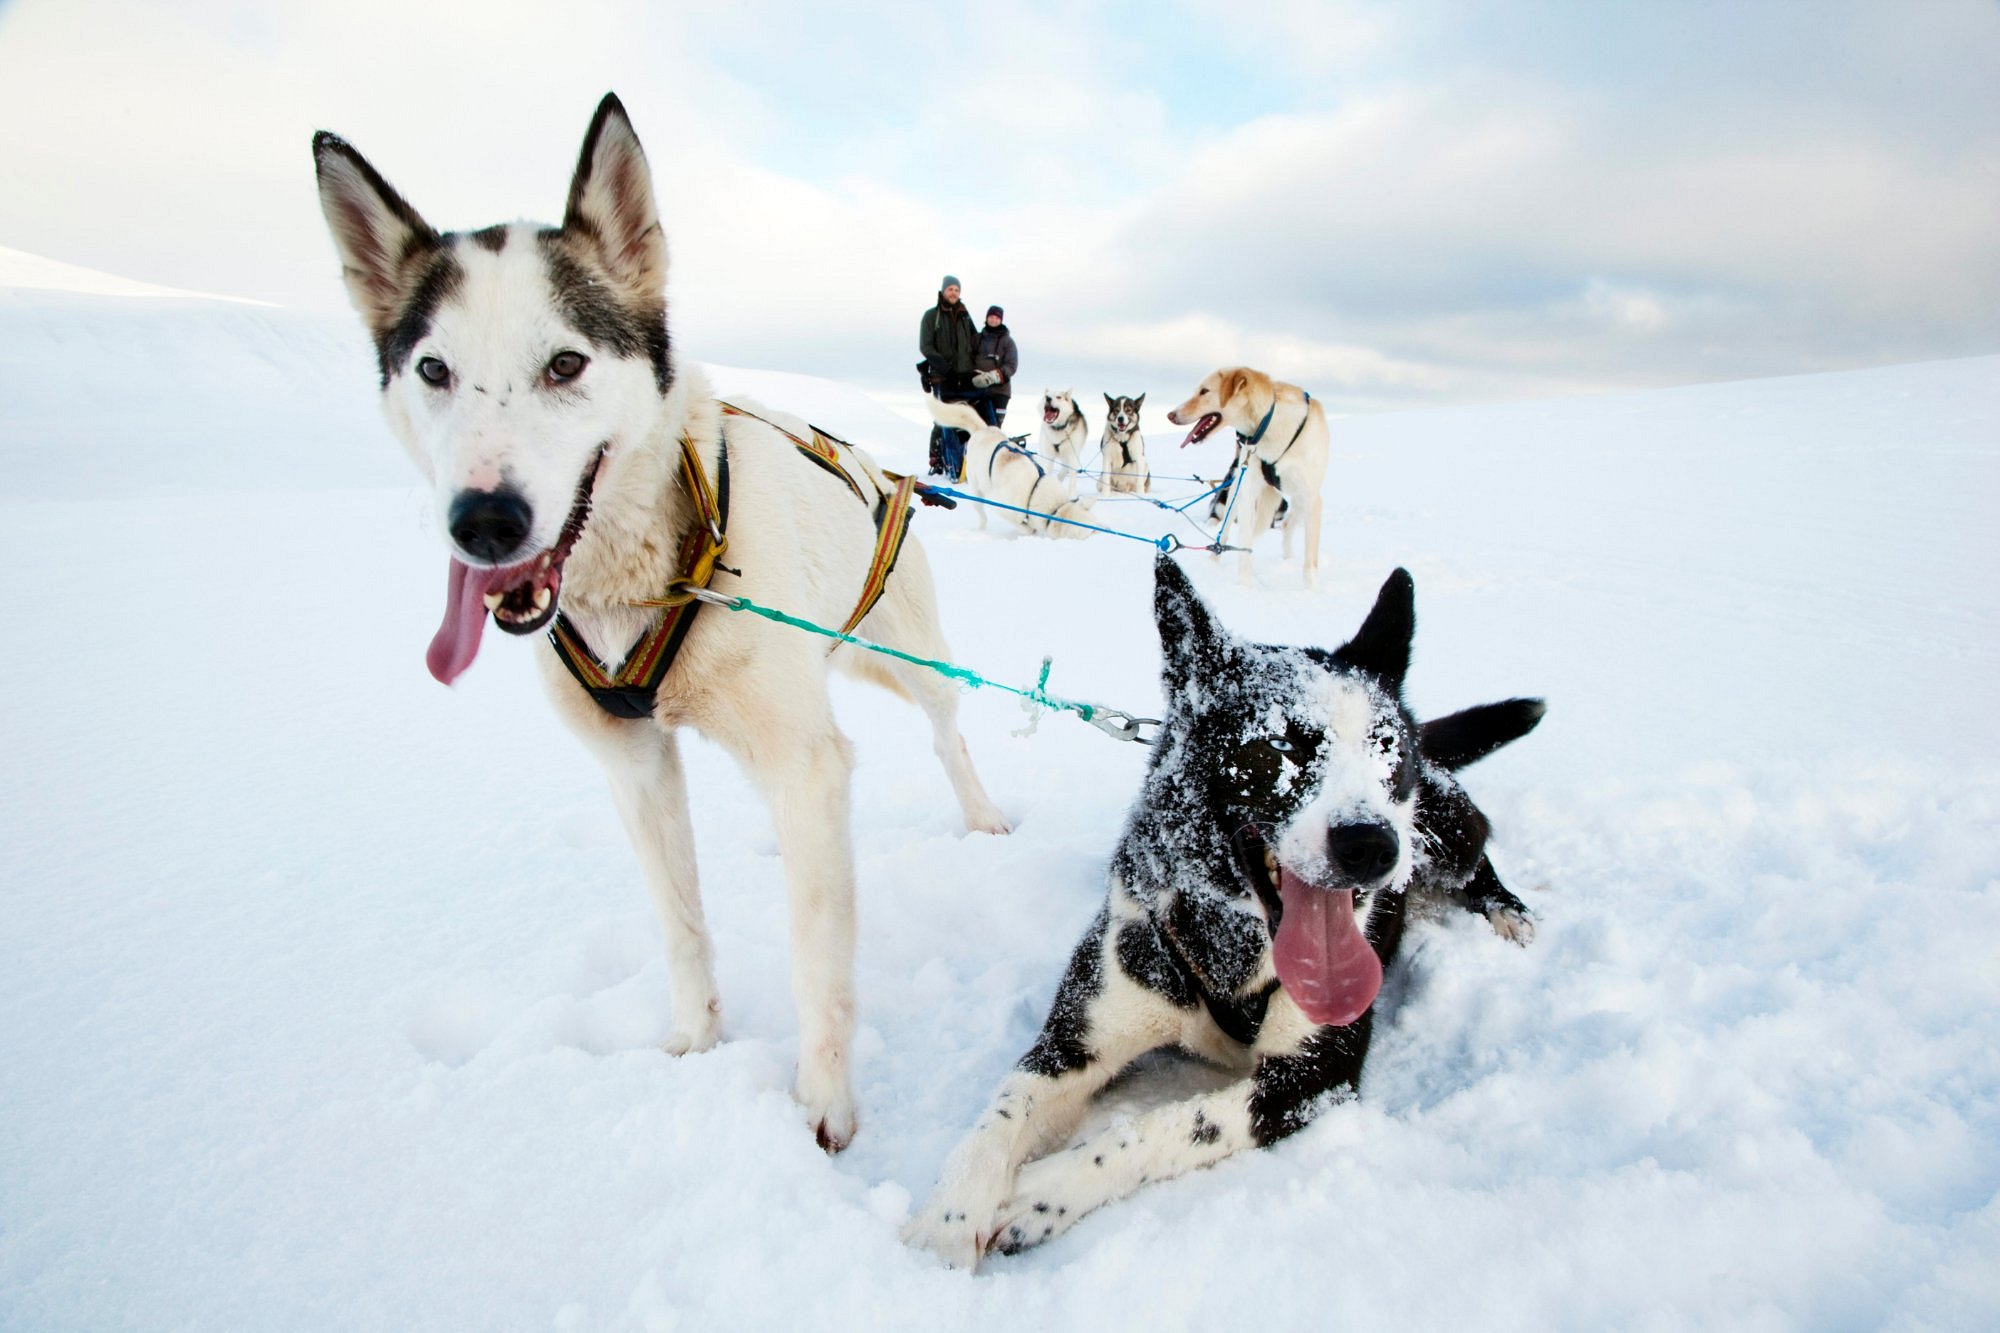 Husky sledding adventure with Basecamp Explorer in Svalbard